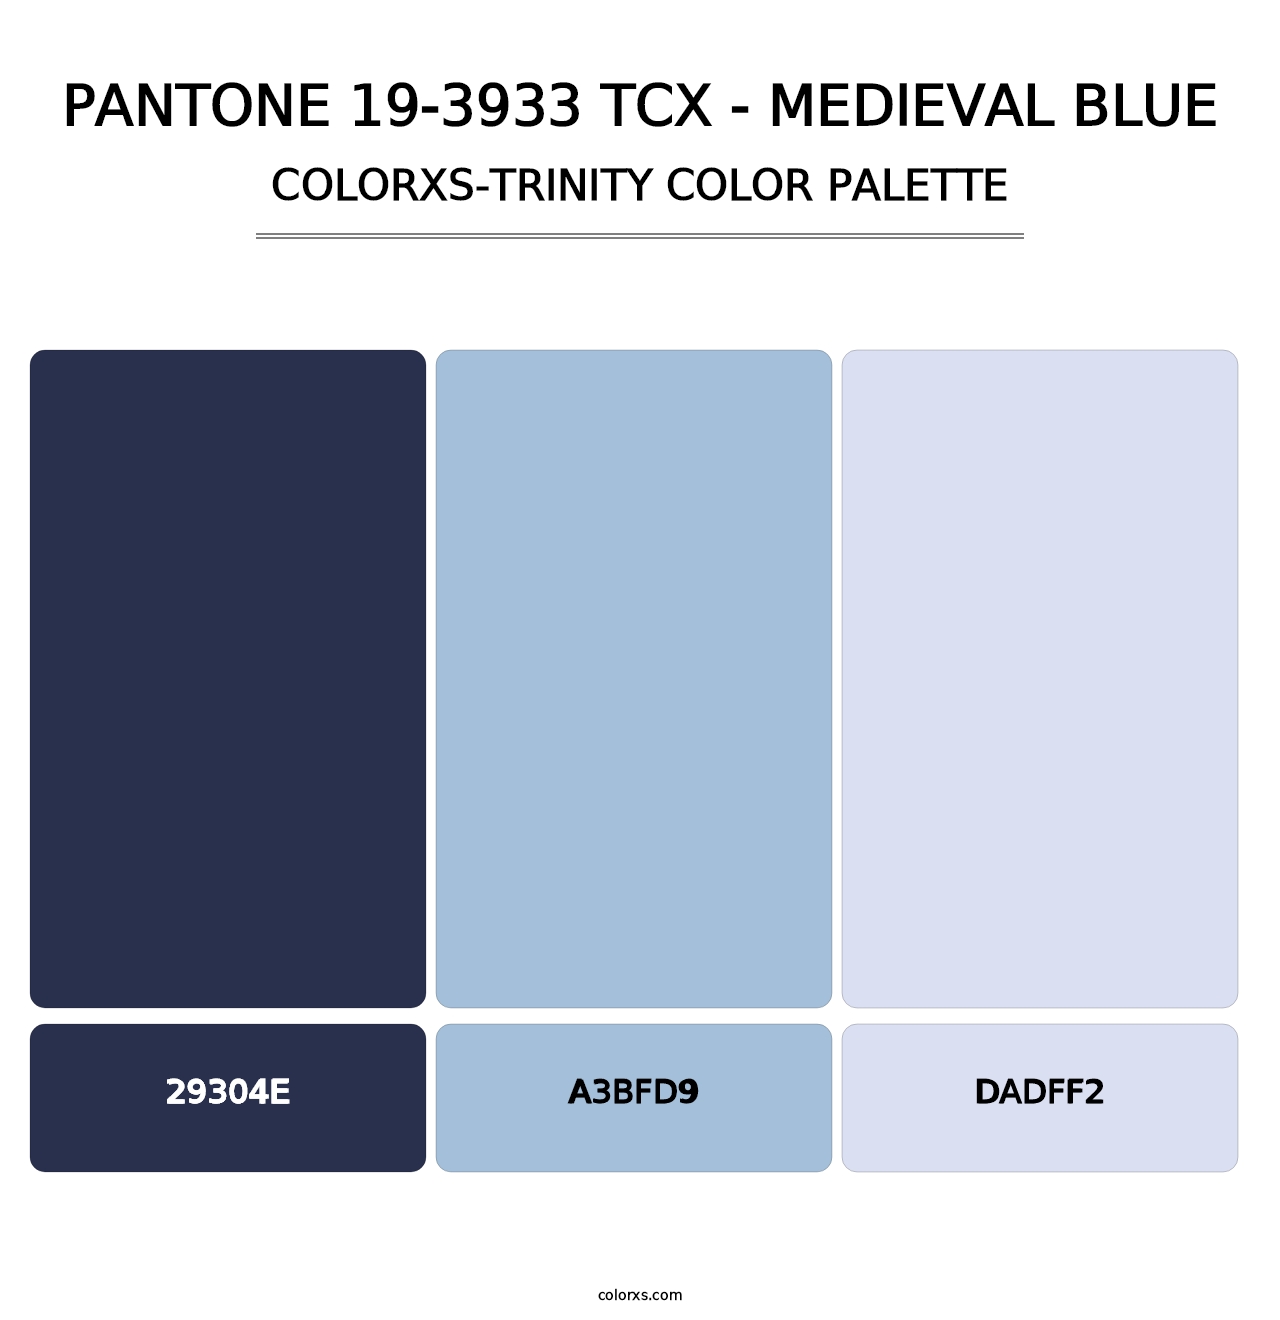 PANTONE 19-3933 TCX - Medieval Blue - Colorxs Trinity Palette